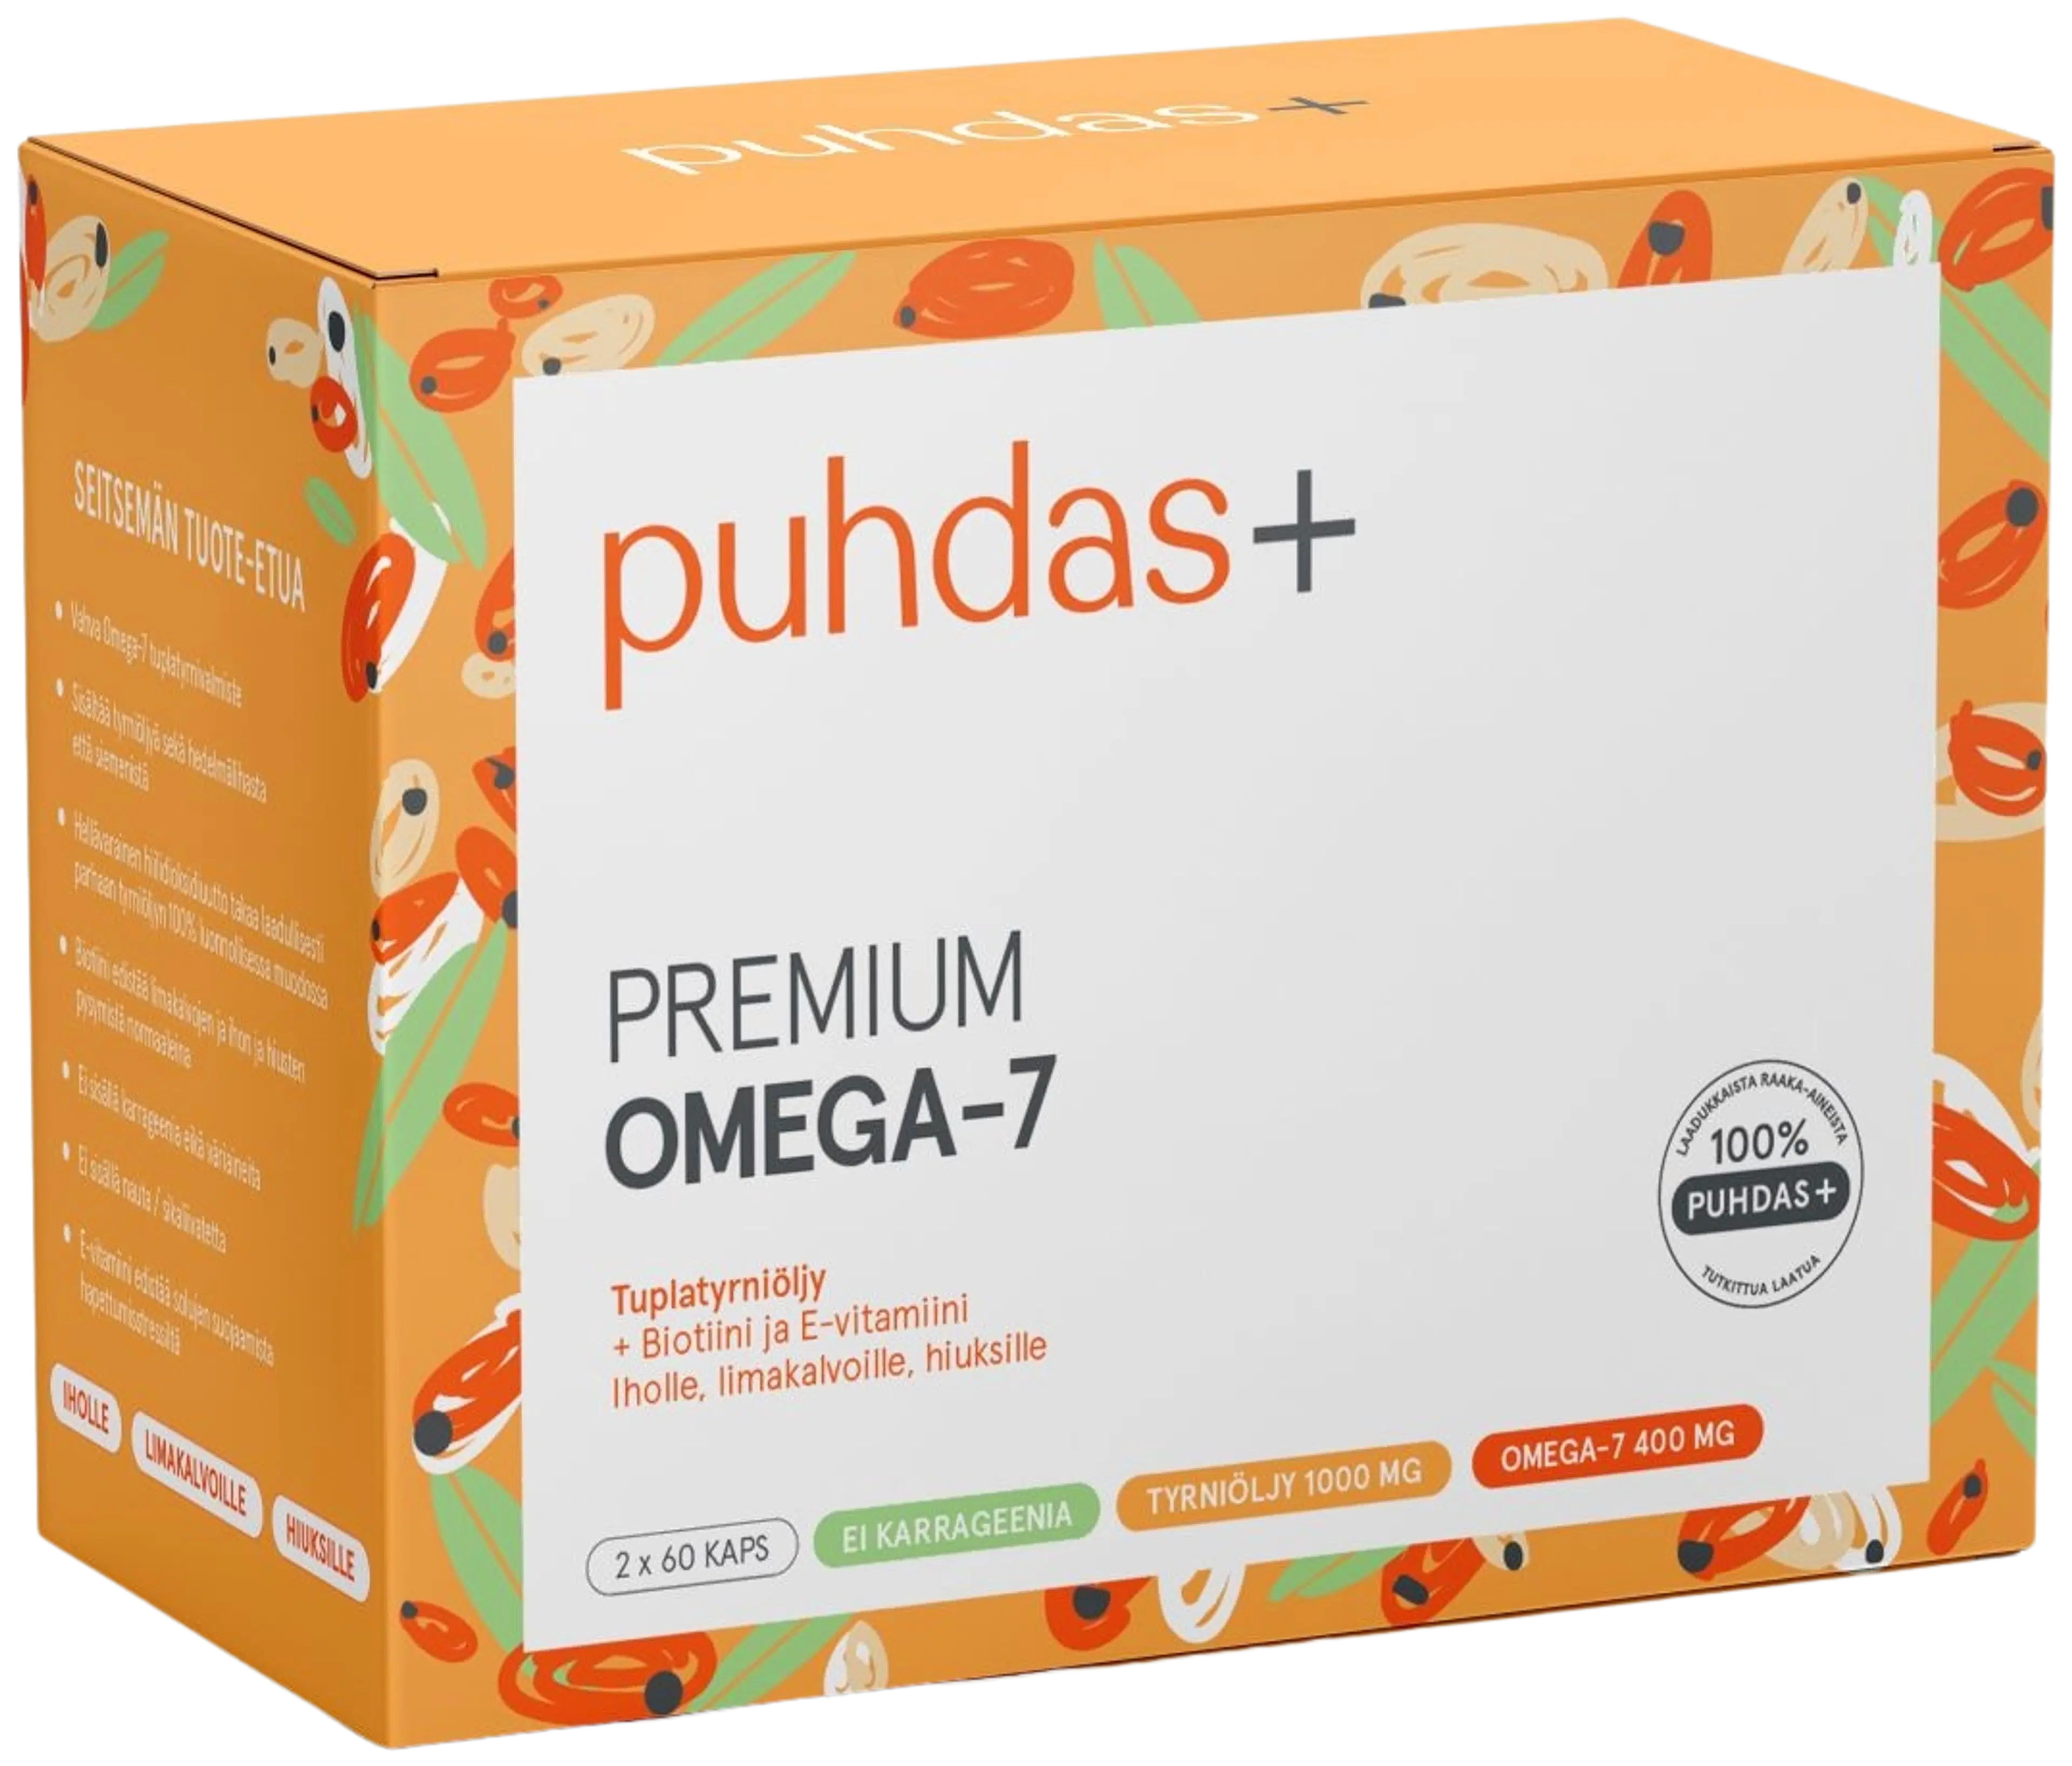 Puhdas+ Premium Omega-7 200mg 120kaps